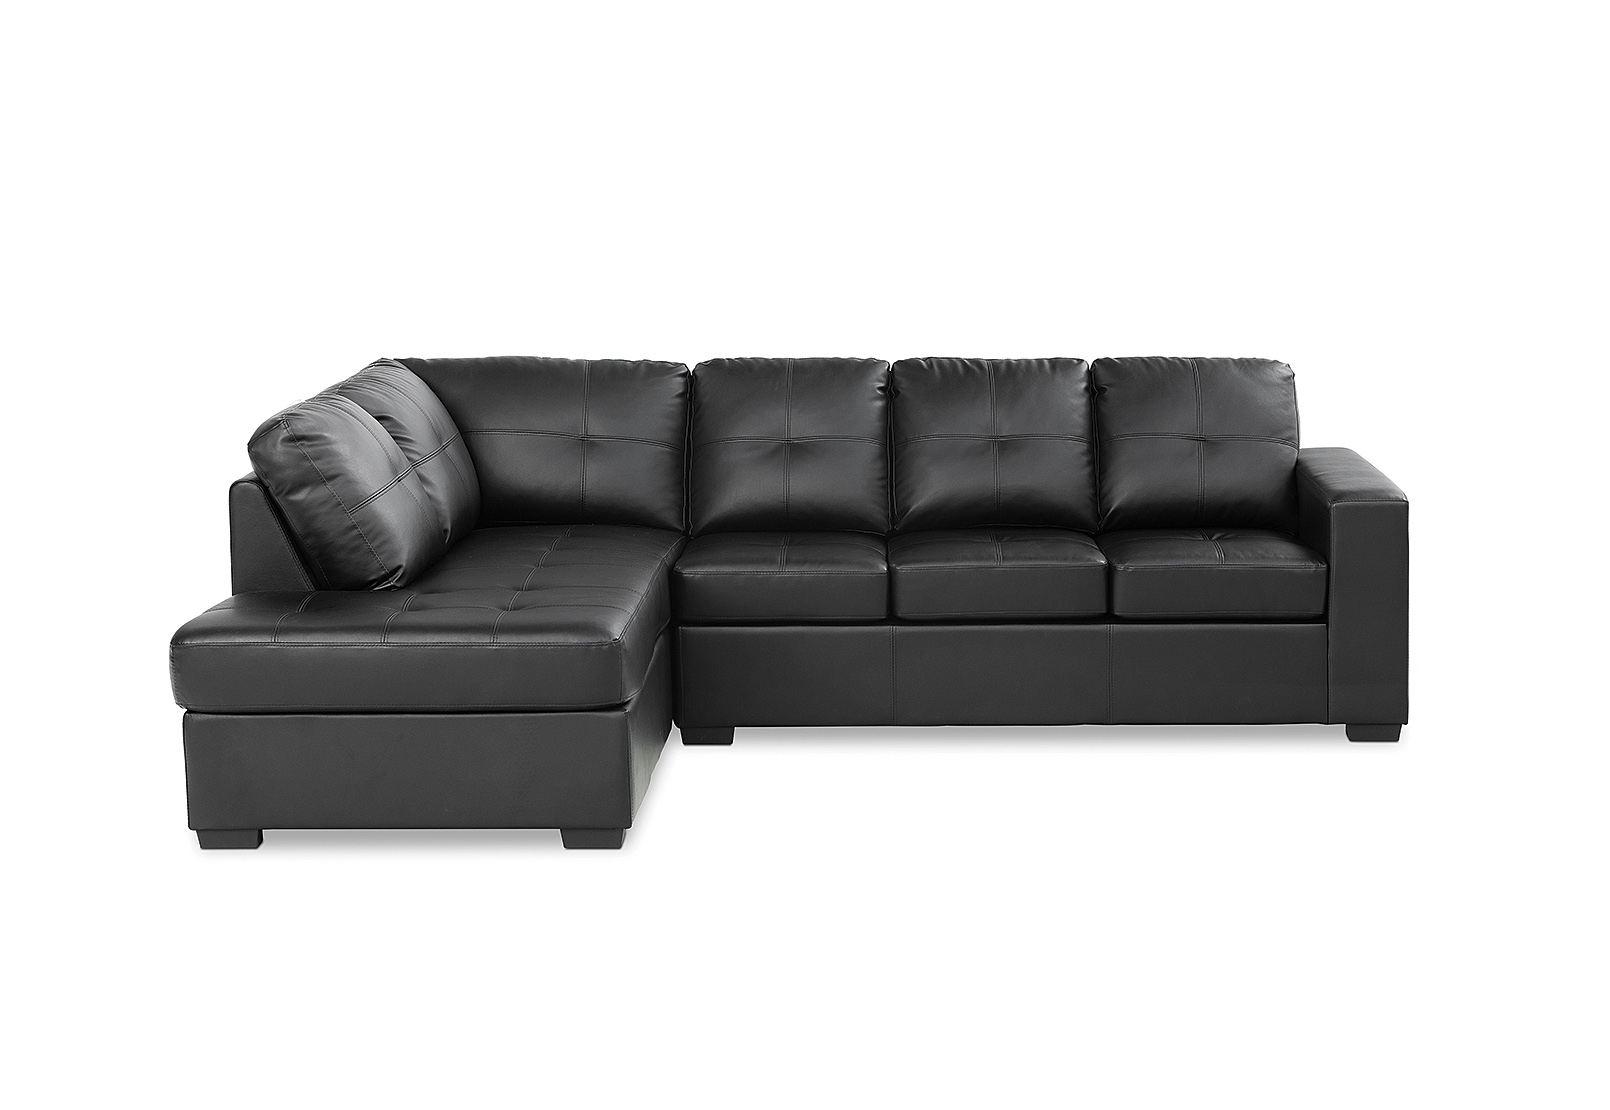 amart leather sofa bed